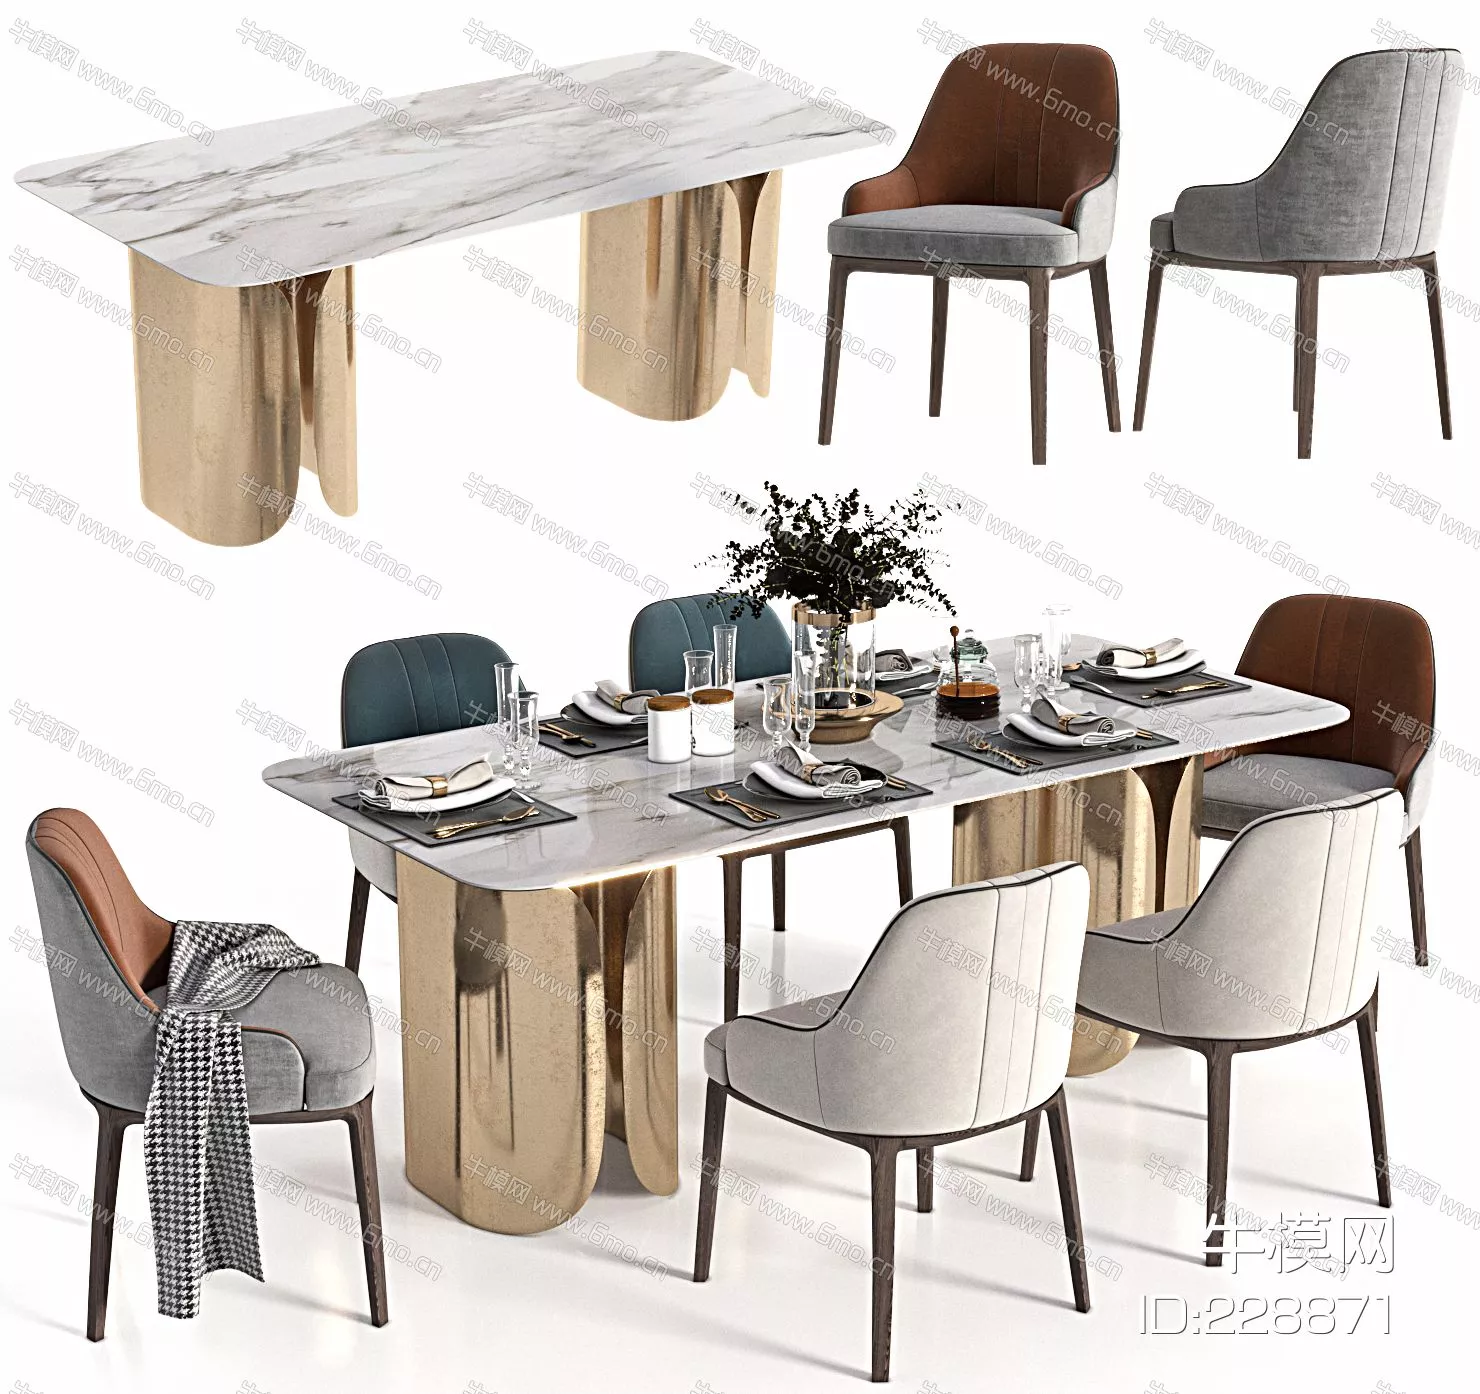 MODERN DINING TABLE SET - SKETCHUP 3D MODEL - VRAY - 228871